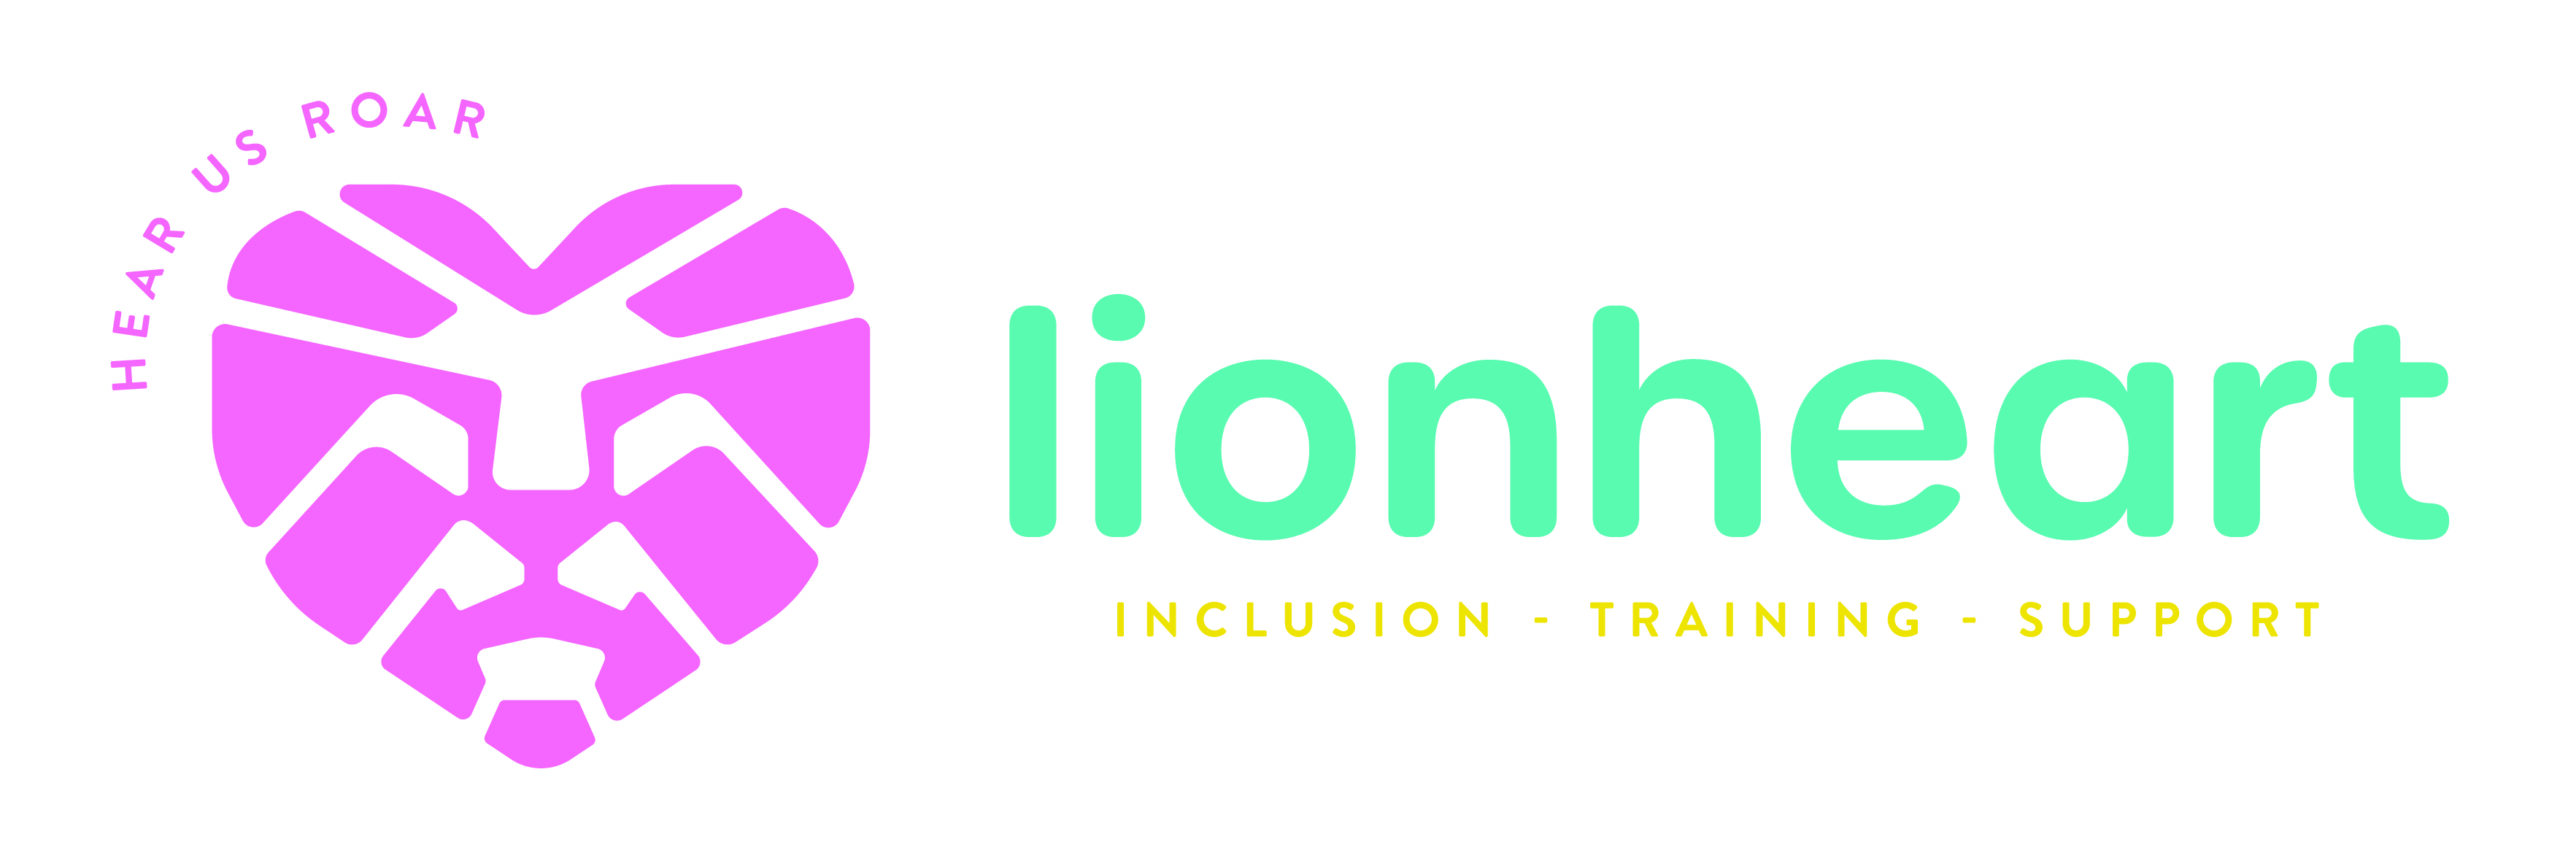 Lionheart Logo - Horizontal Colour Print